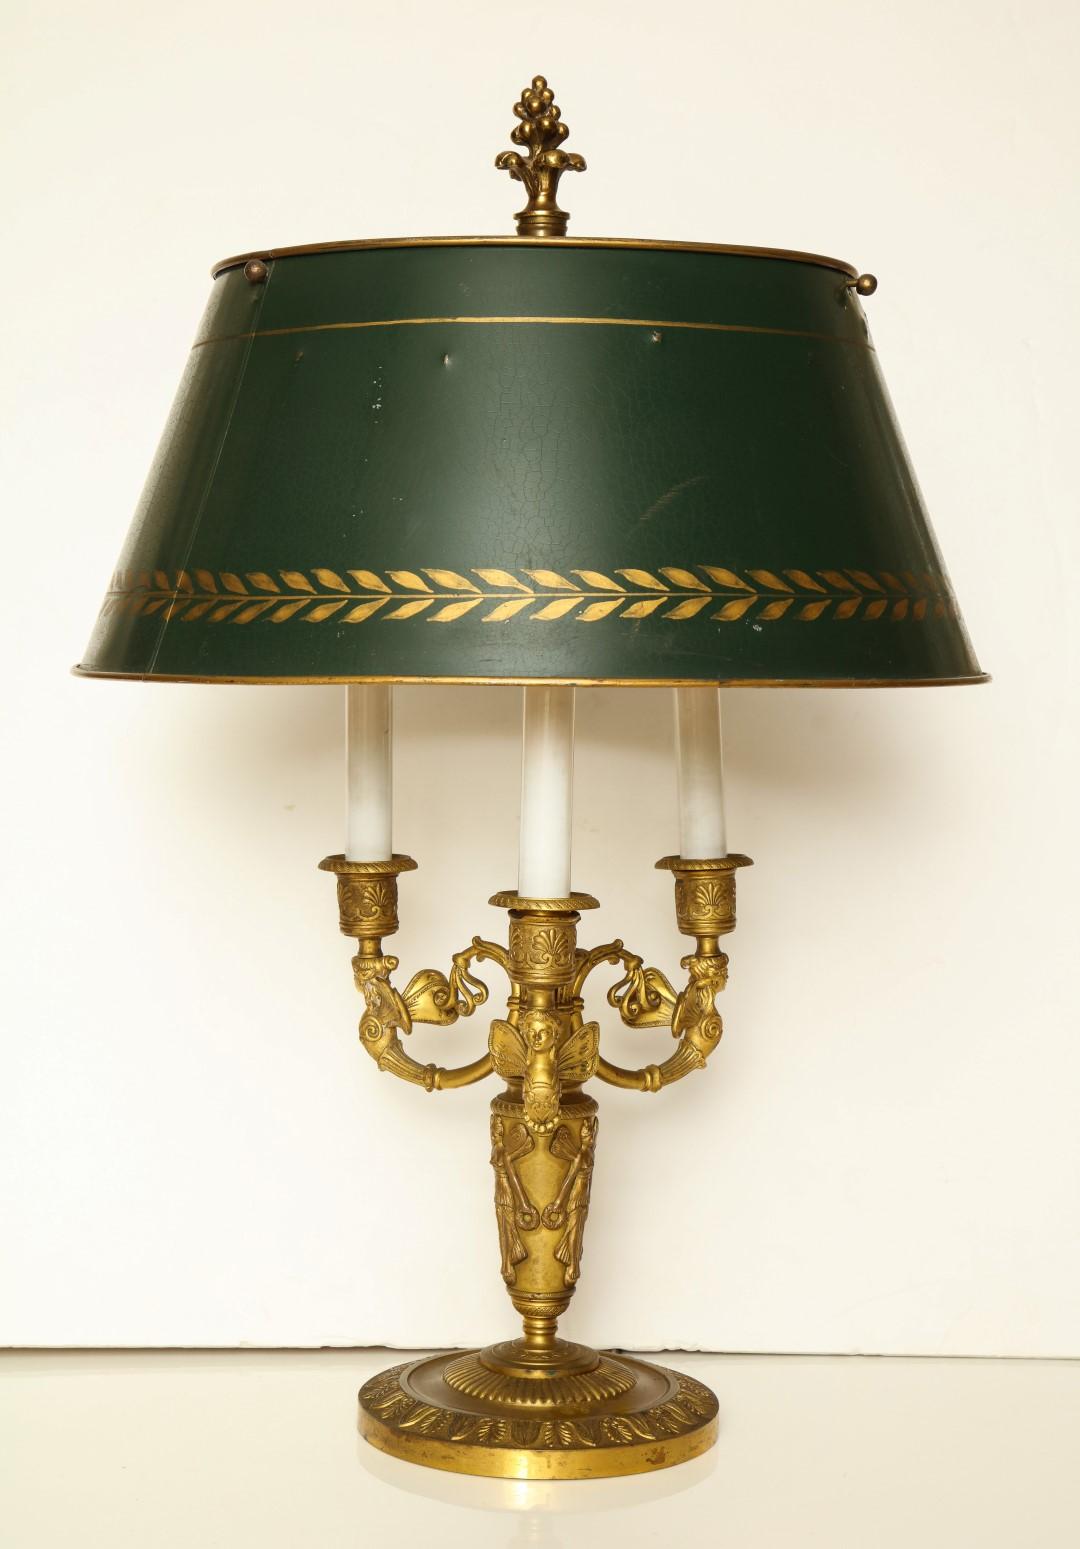 Early 19th Century Empire Bouilotte Lamp